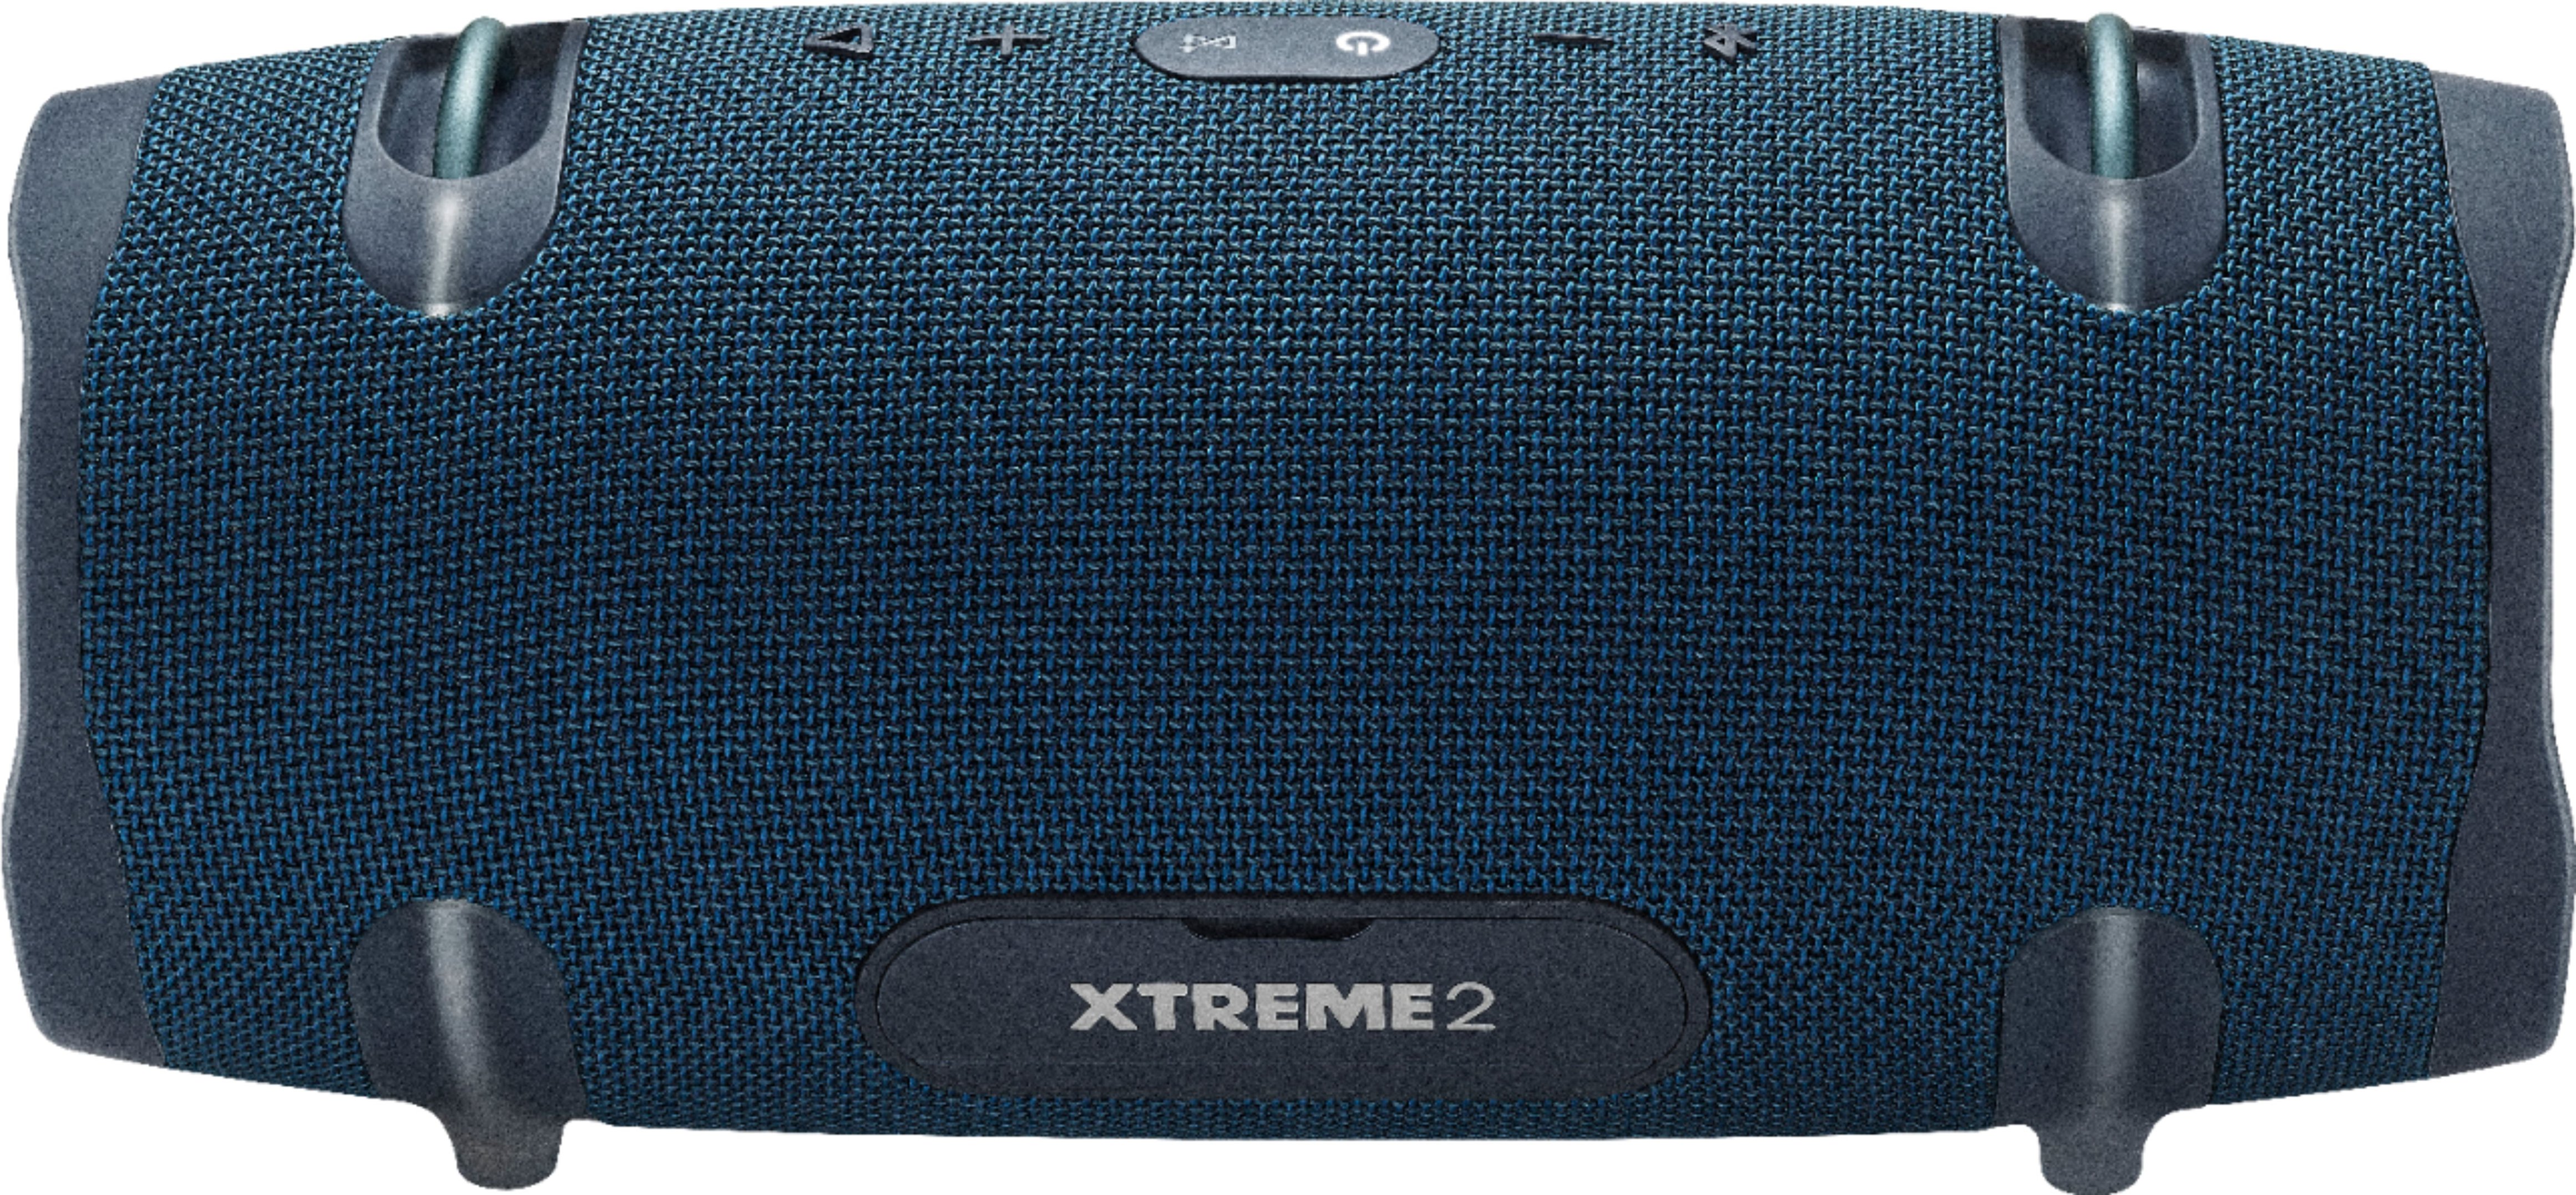 New JBL Xtreme 2 Portable Bluetooth Wireless Waterproof Speaker Black 